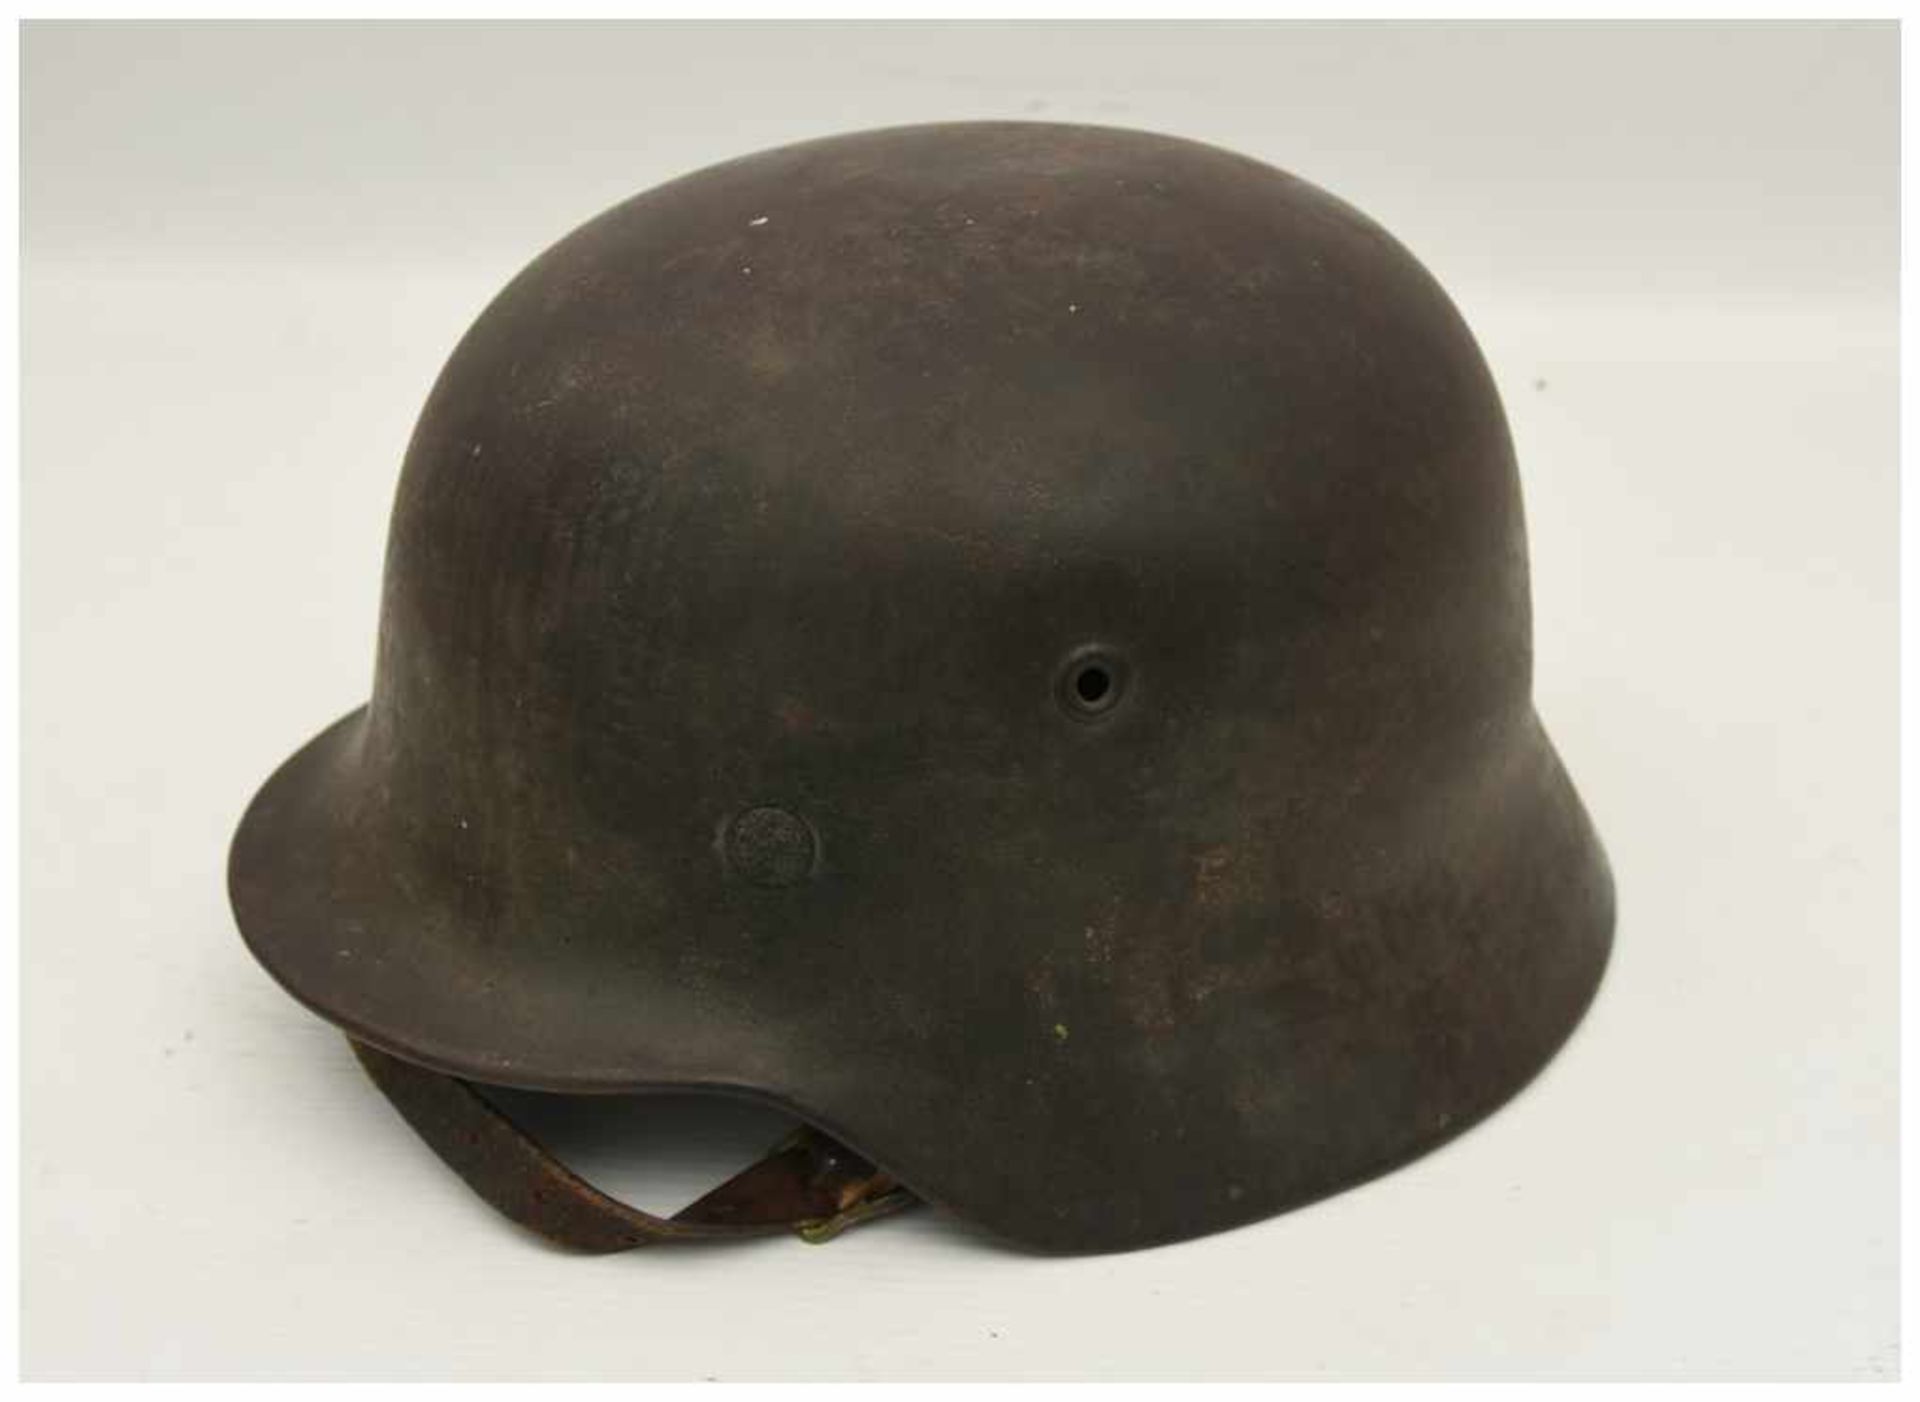 HELM M40, Stahl/Leder, Drittes Reich um 1940 Helm Modell 40. Originales Innenfutter und komplette - Image 3 of 6